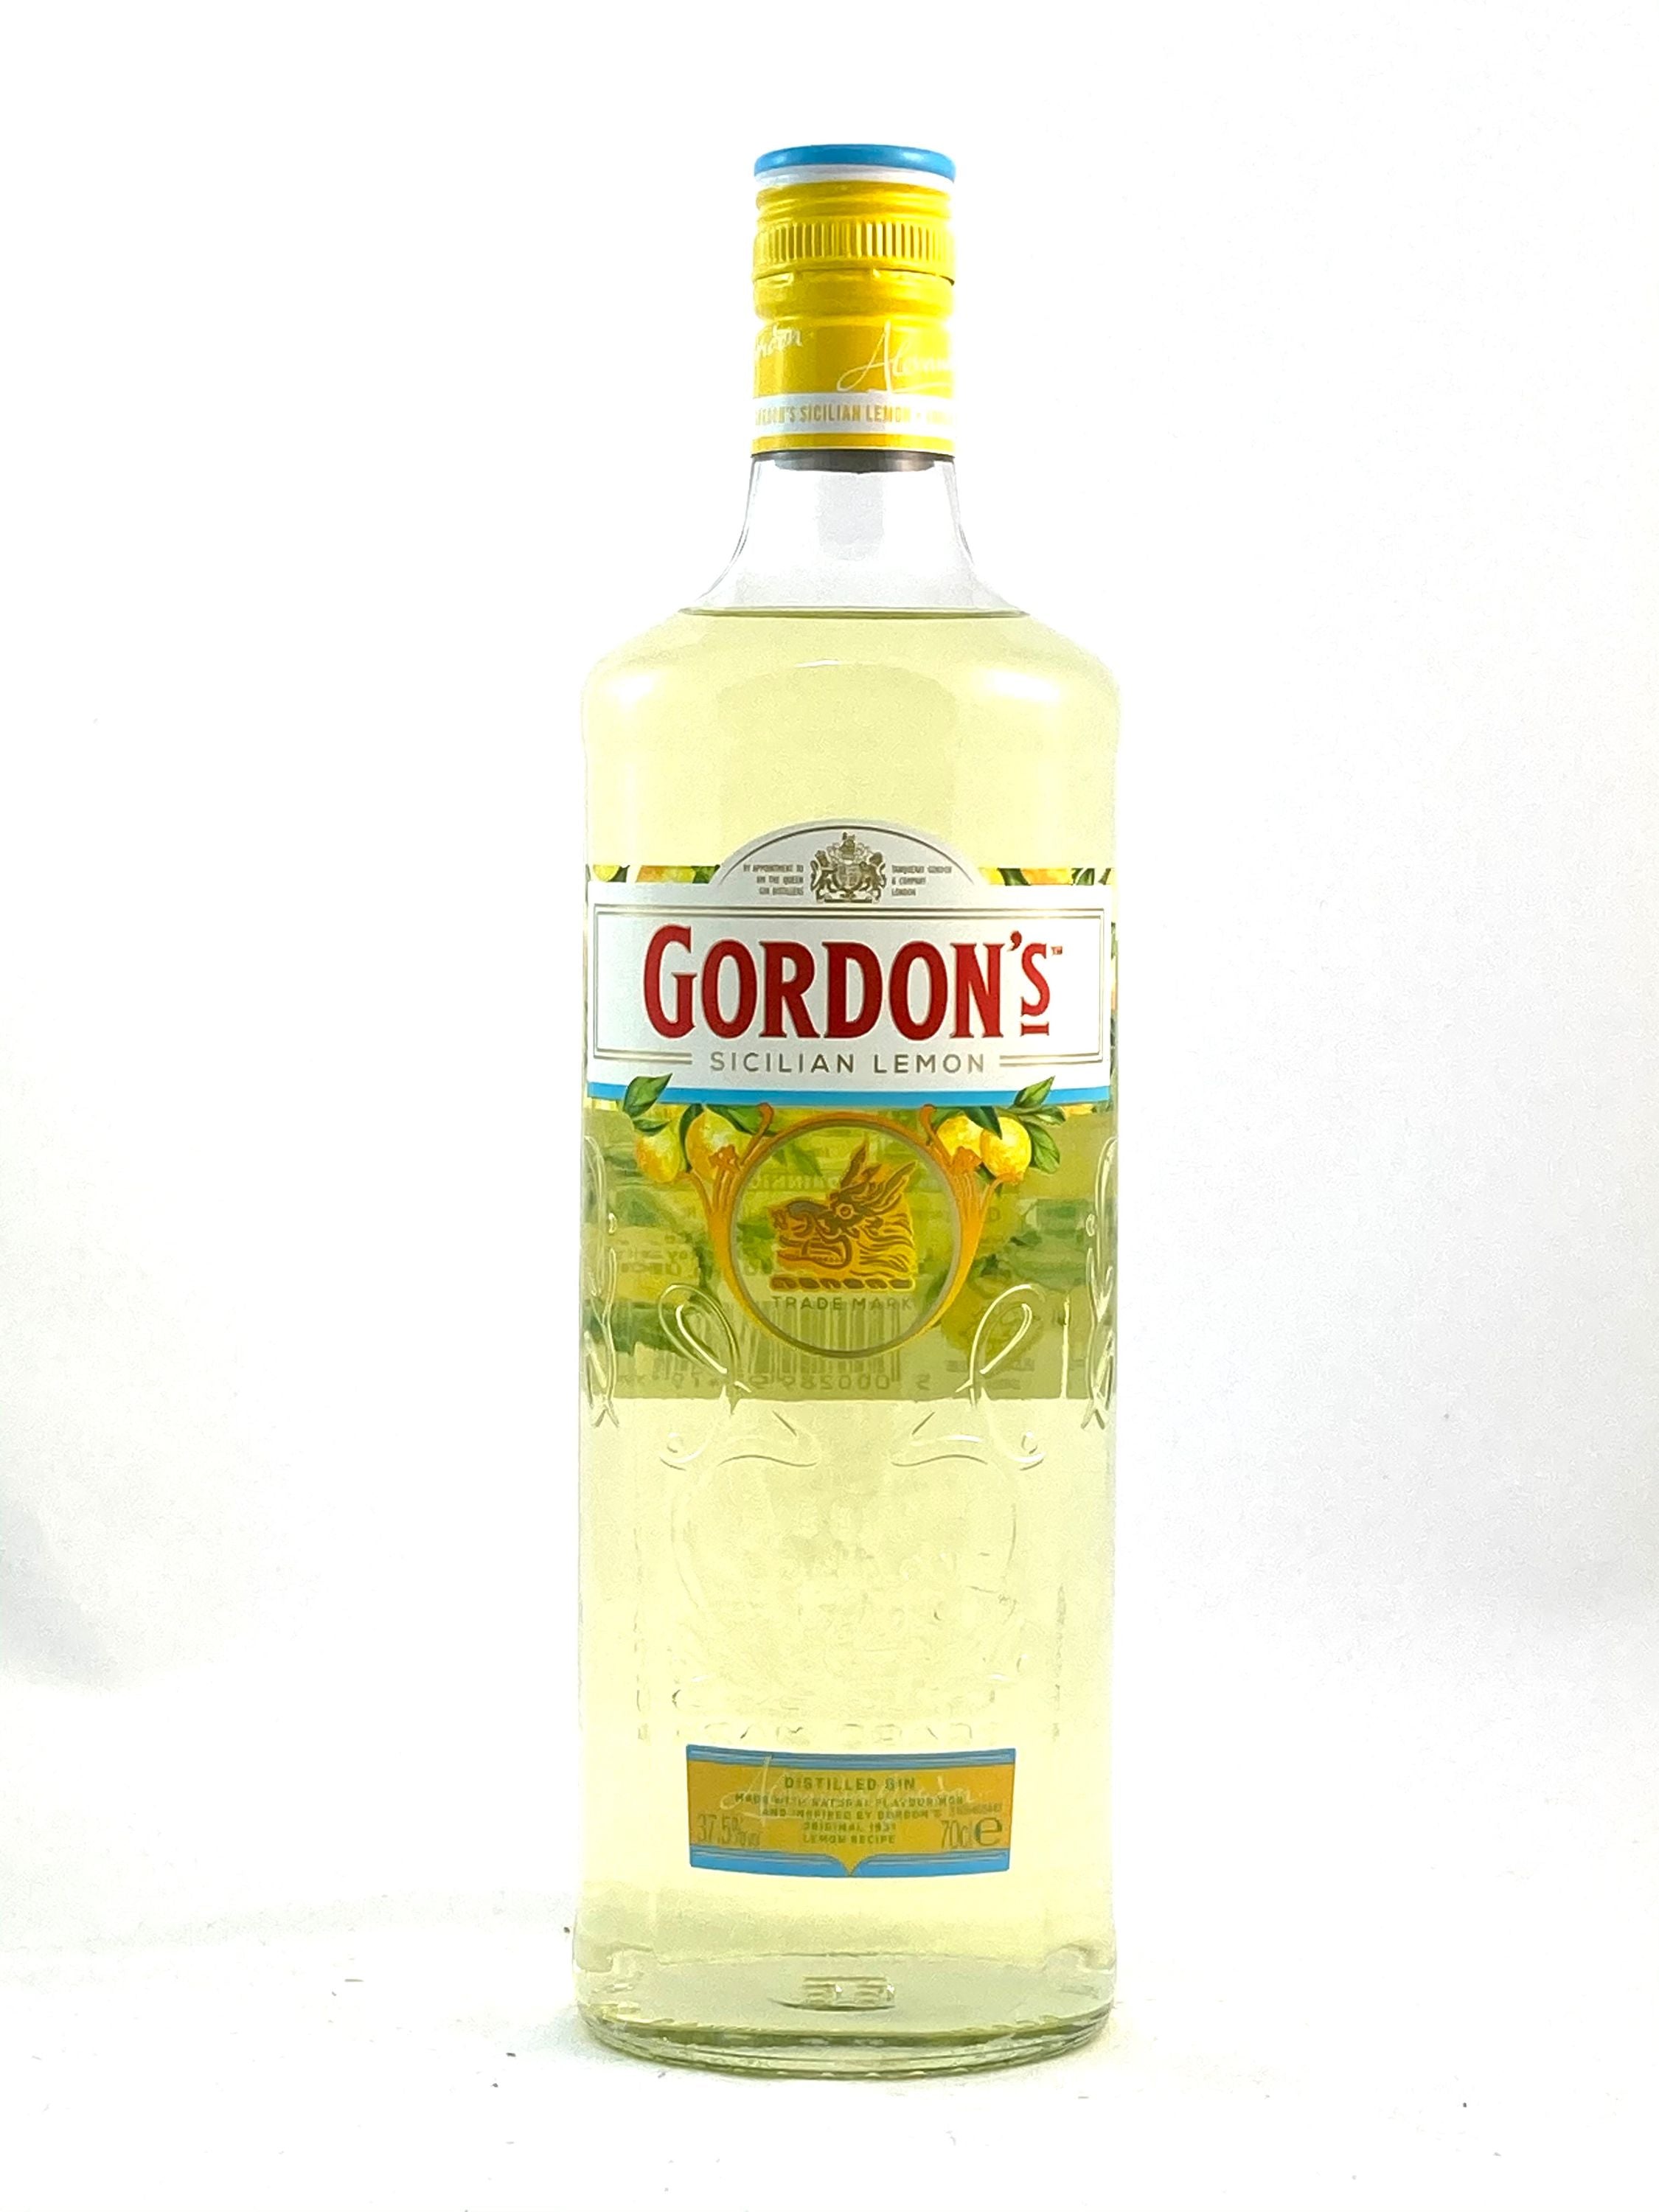 Gordon's Sicilian Lemon Gin 0,7l, alc. 37,5 Vol.-%, Gin England